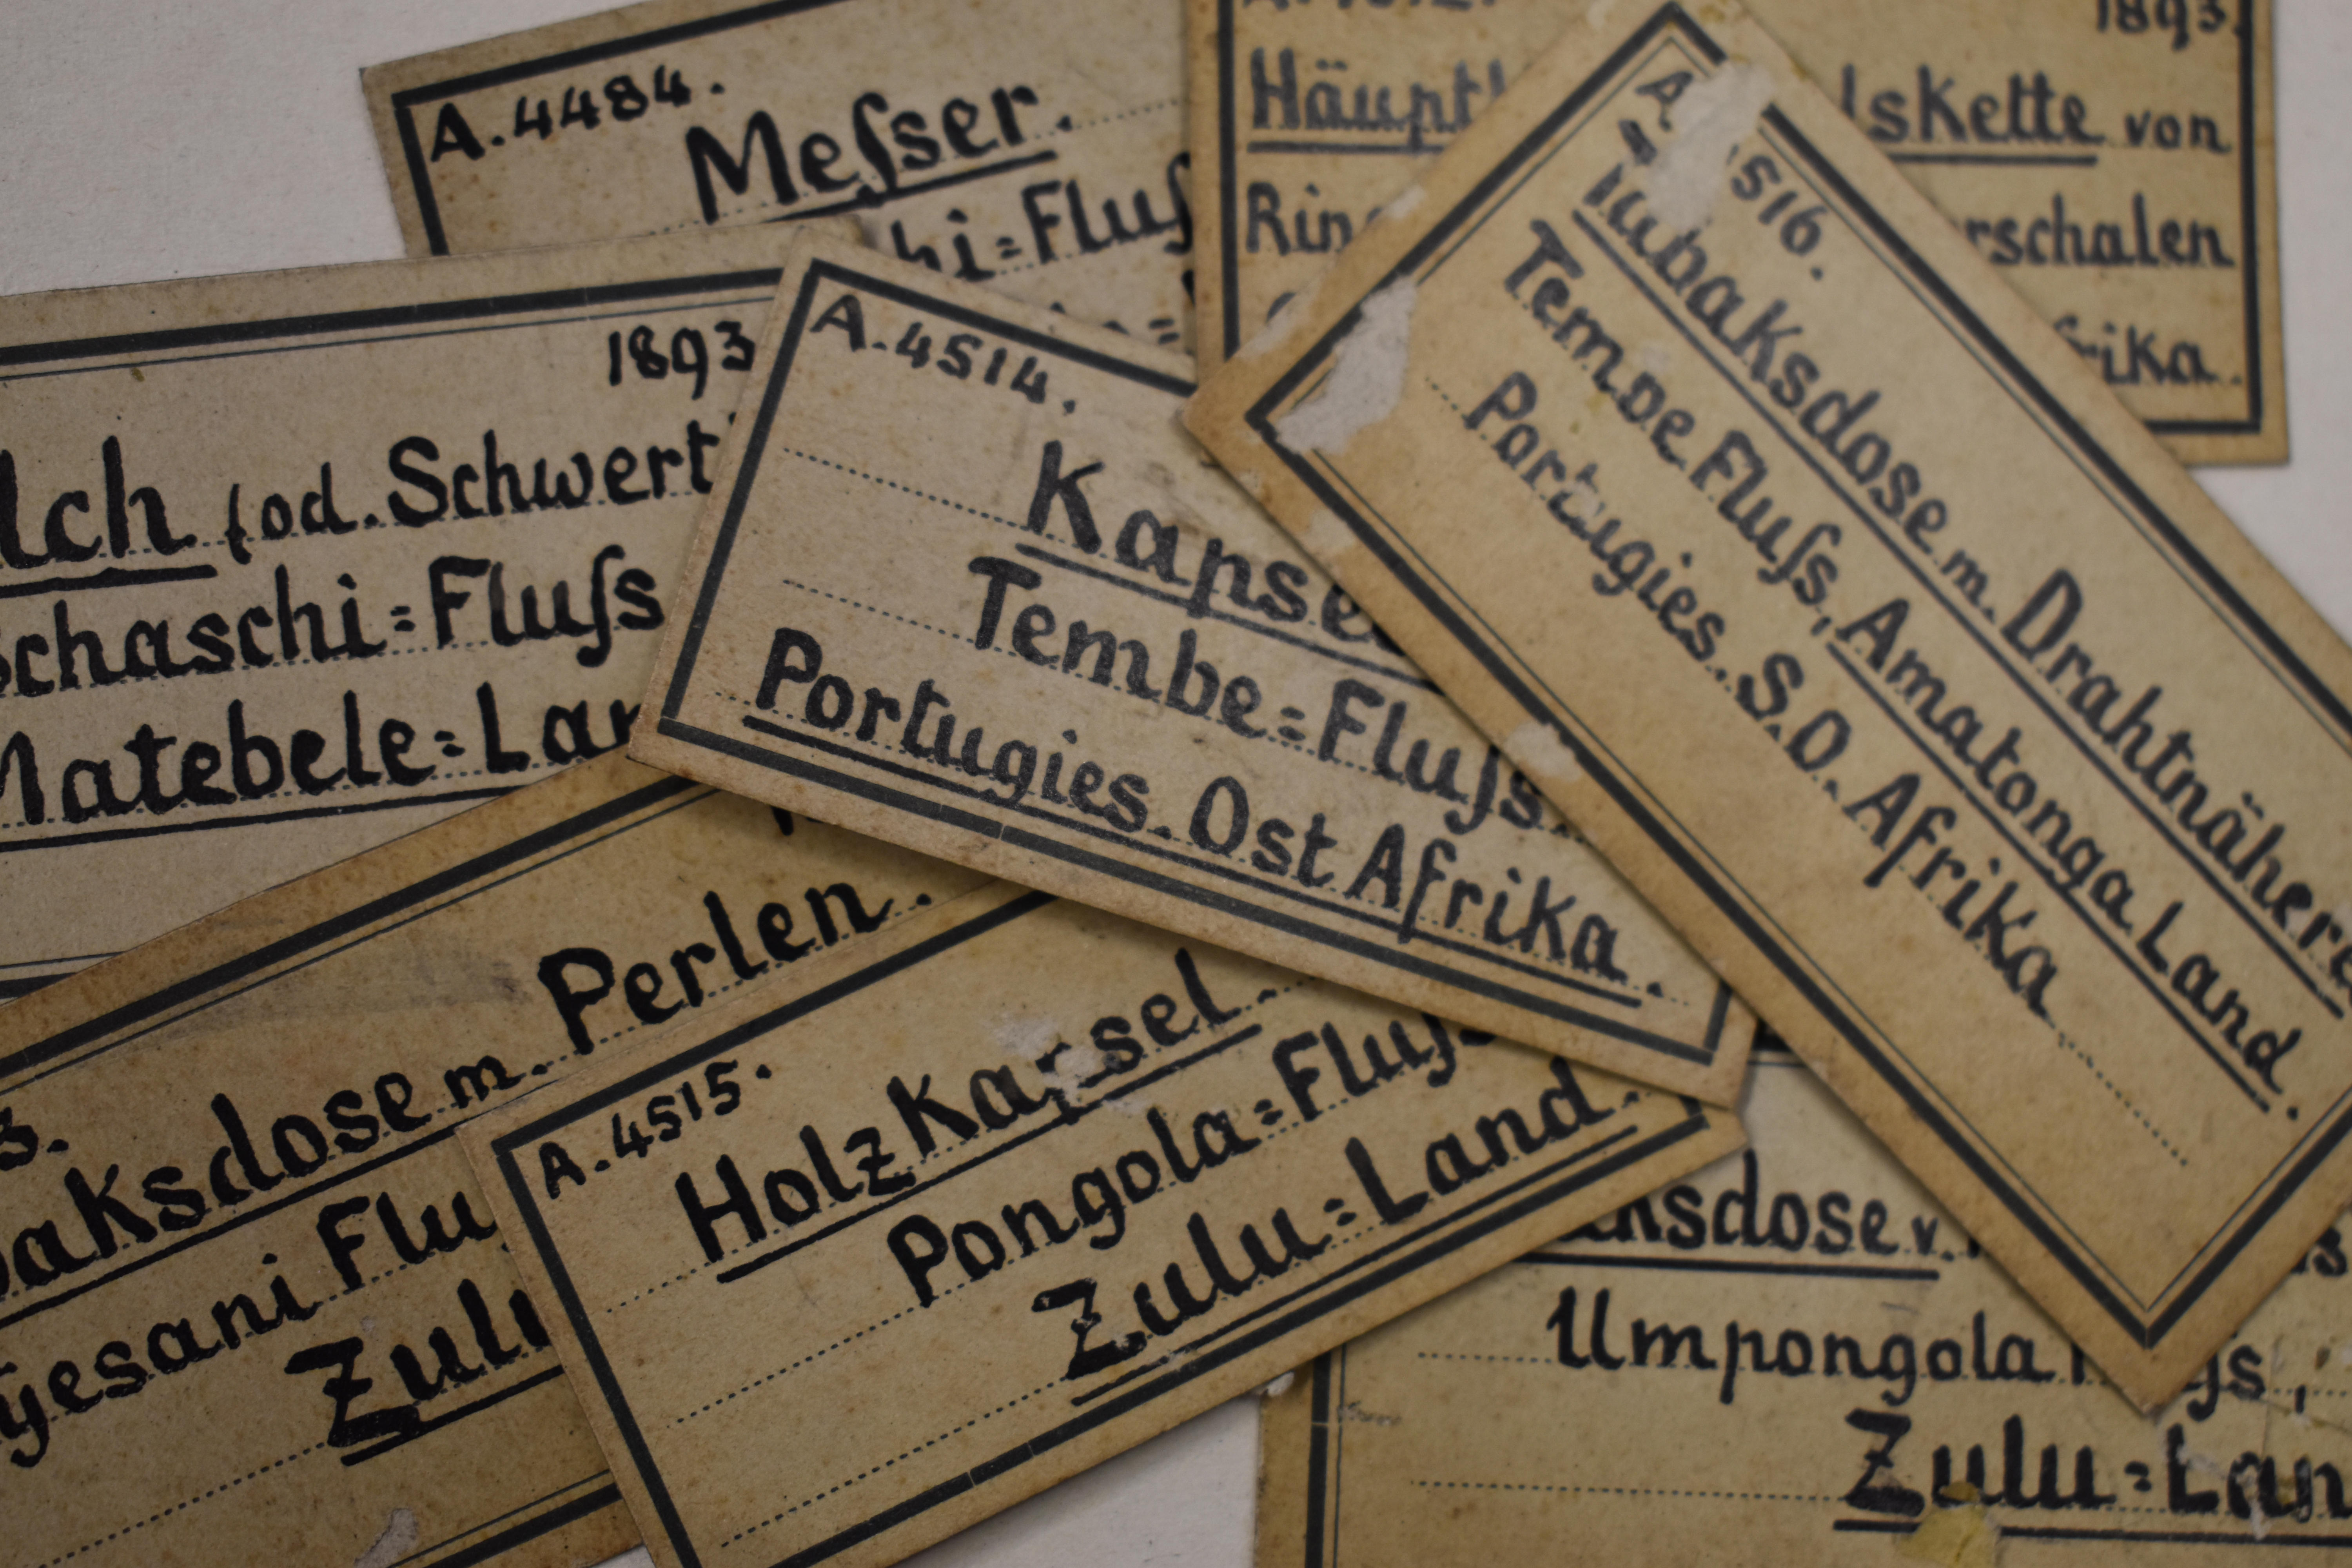 Historische Objektbeschriftungen aus dem Archiv der Reiss-Engelhorn-Museen Mannheim